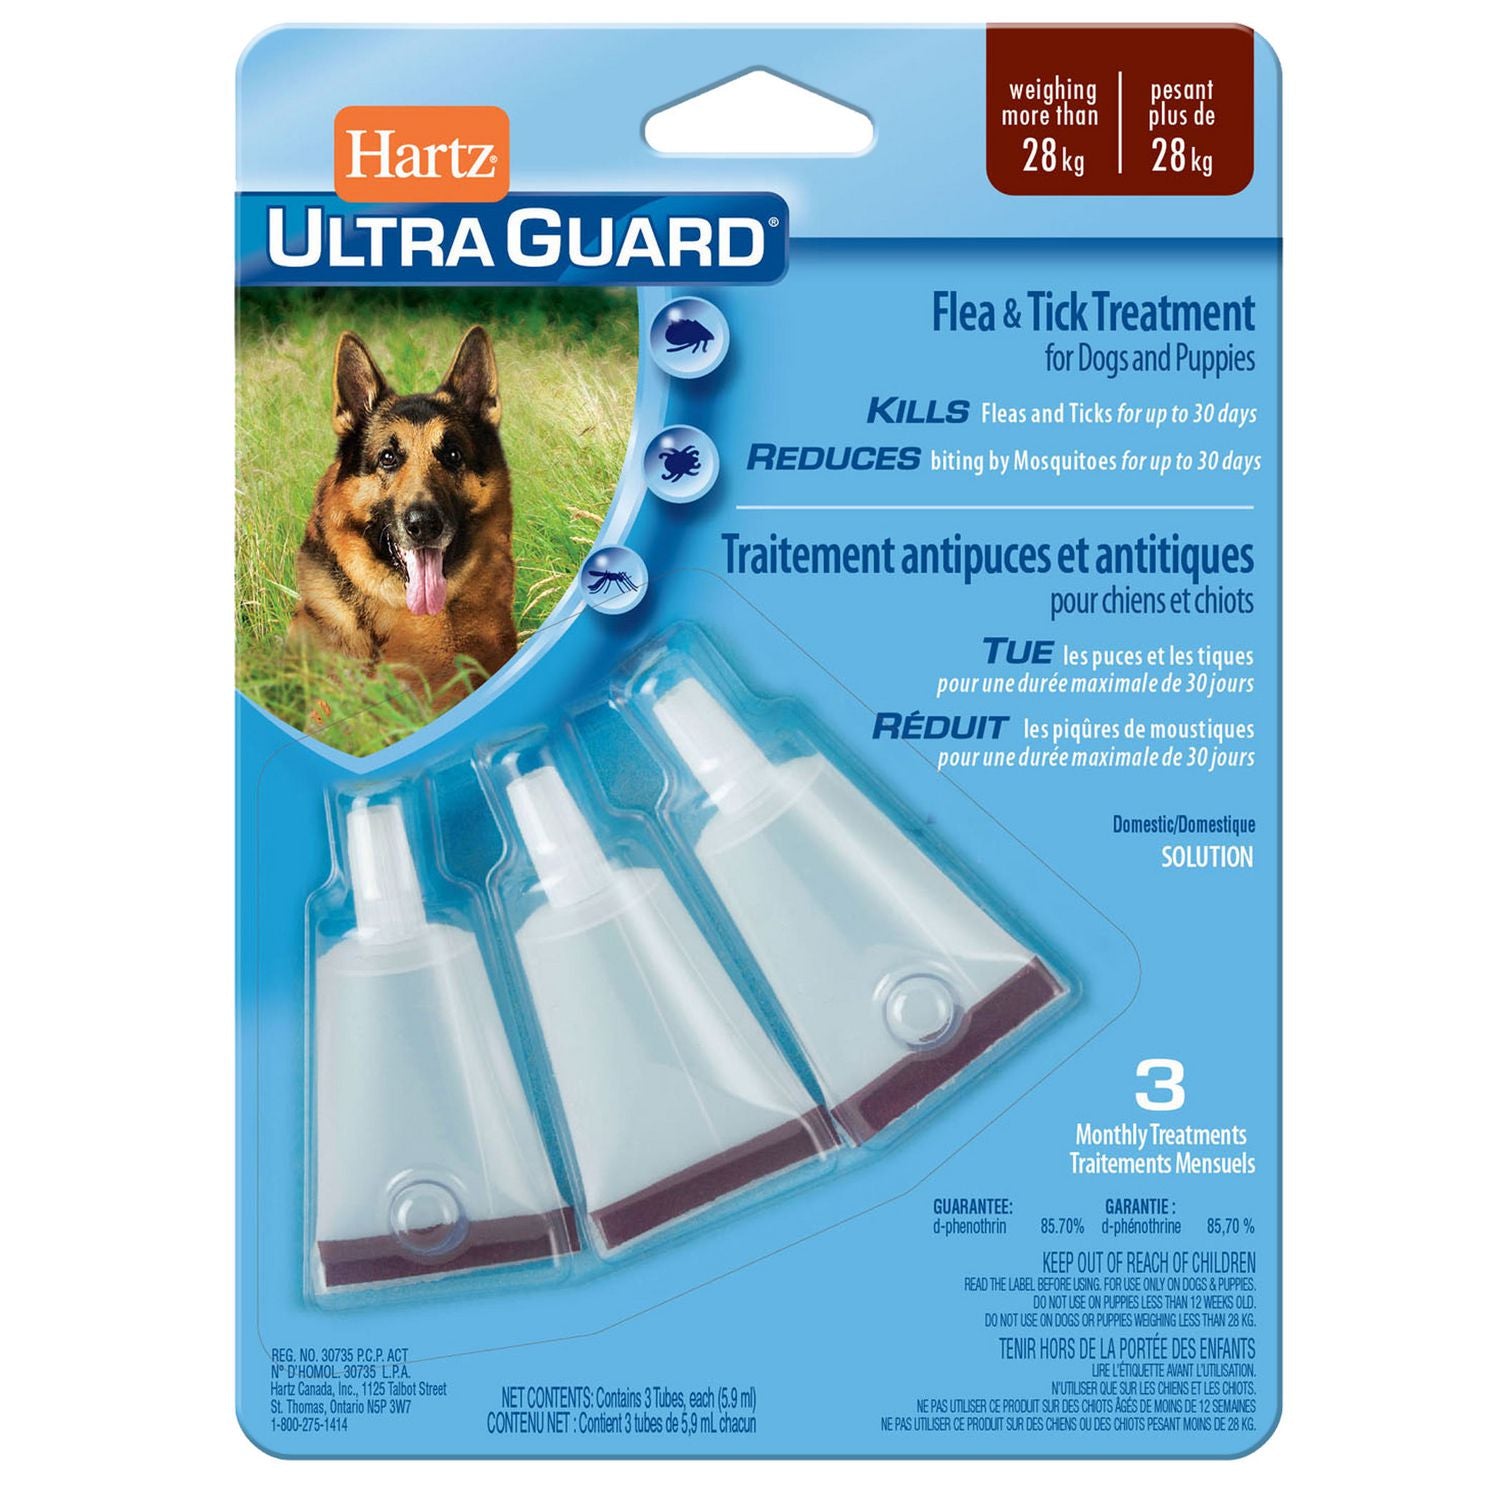 Hartz Ultra Guard Flea & Tick Treatment for Dogs - 28 + kgs